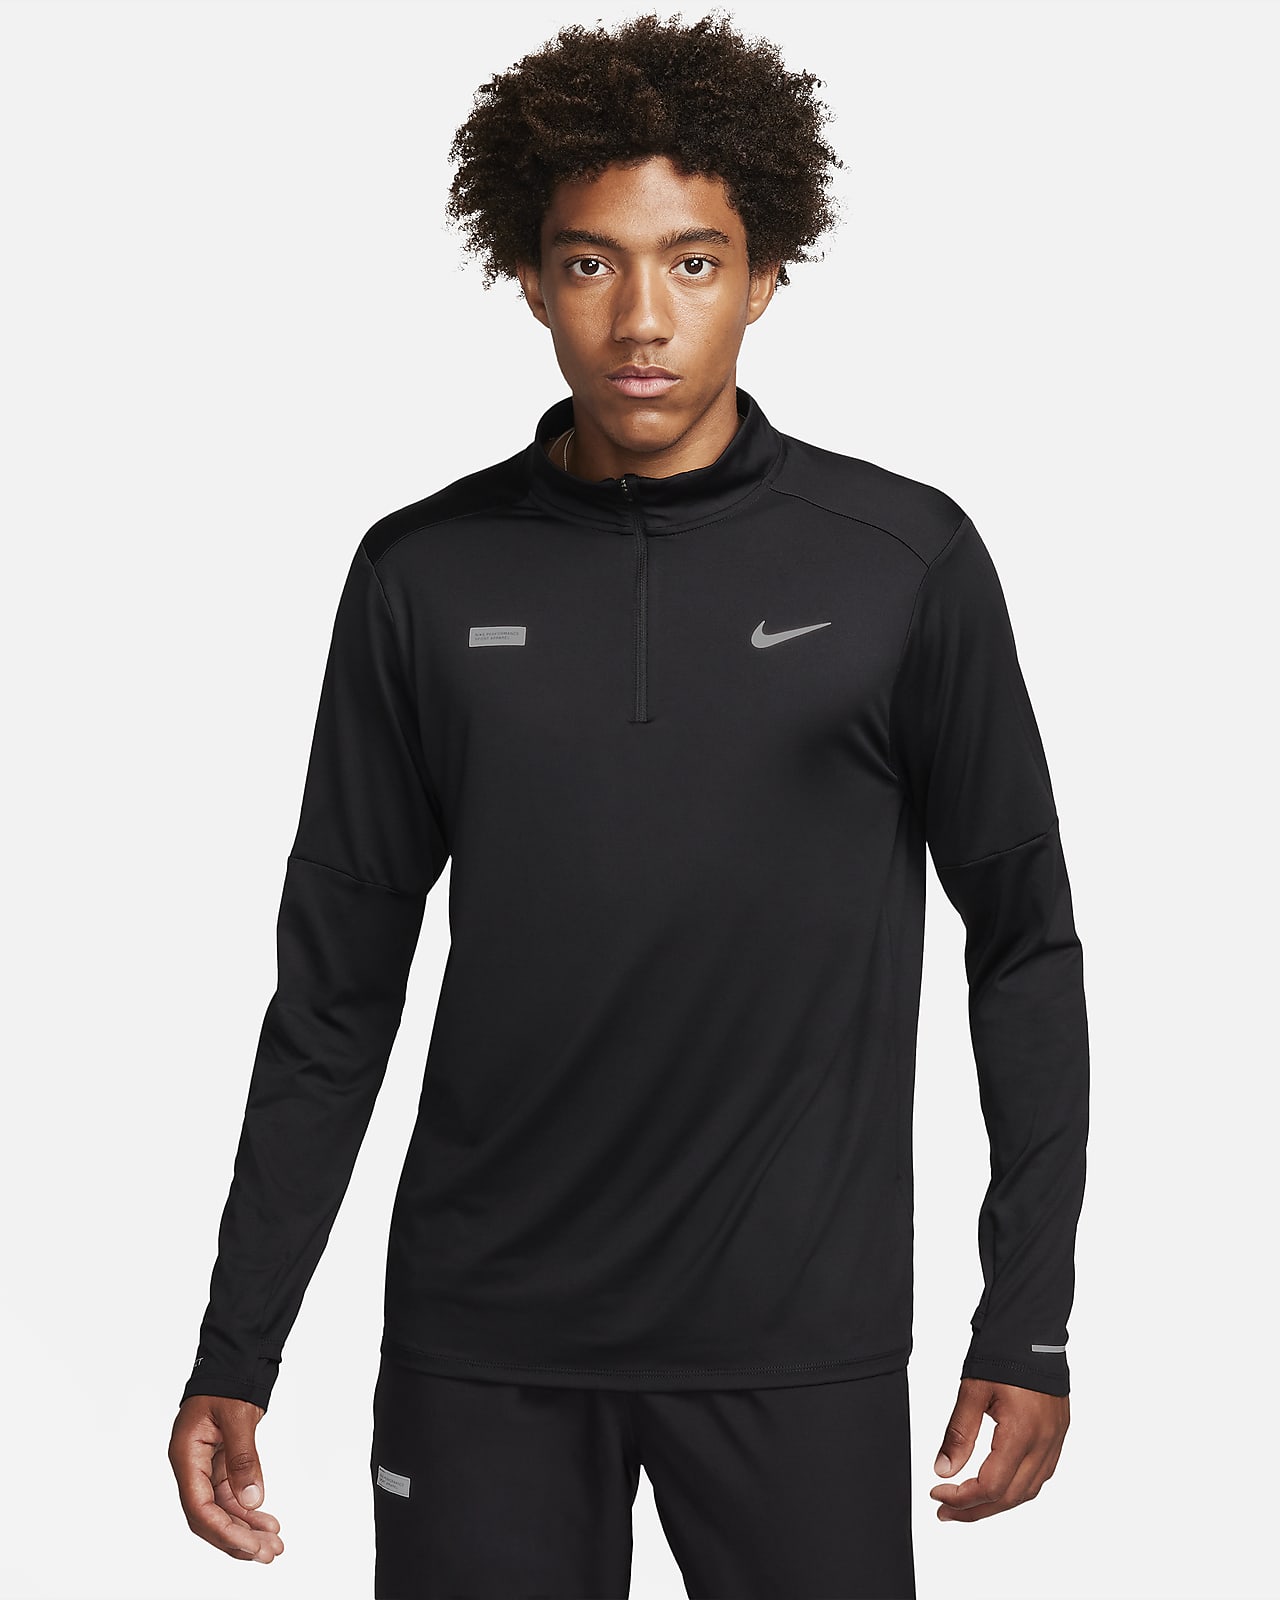 Nike Flash Dri-FIT rövid cipzáras férfi futófelső